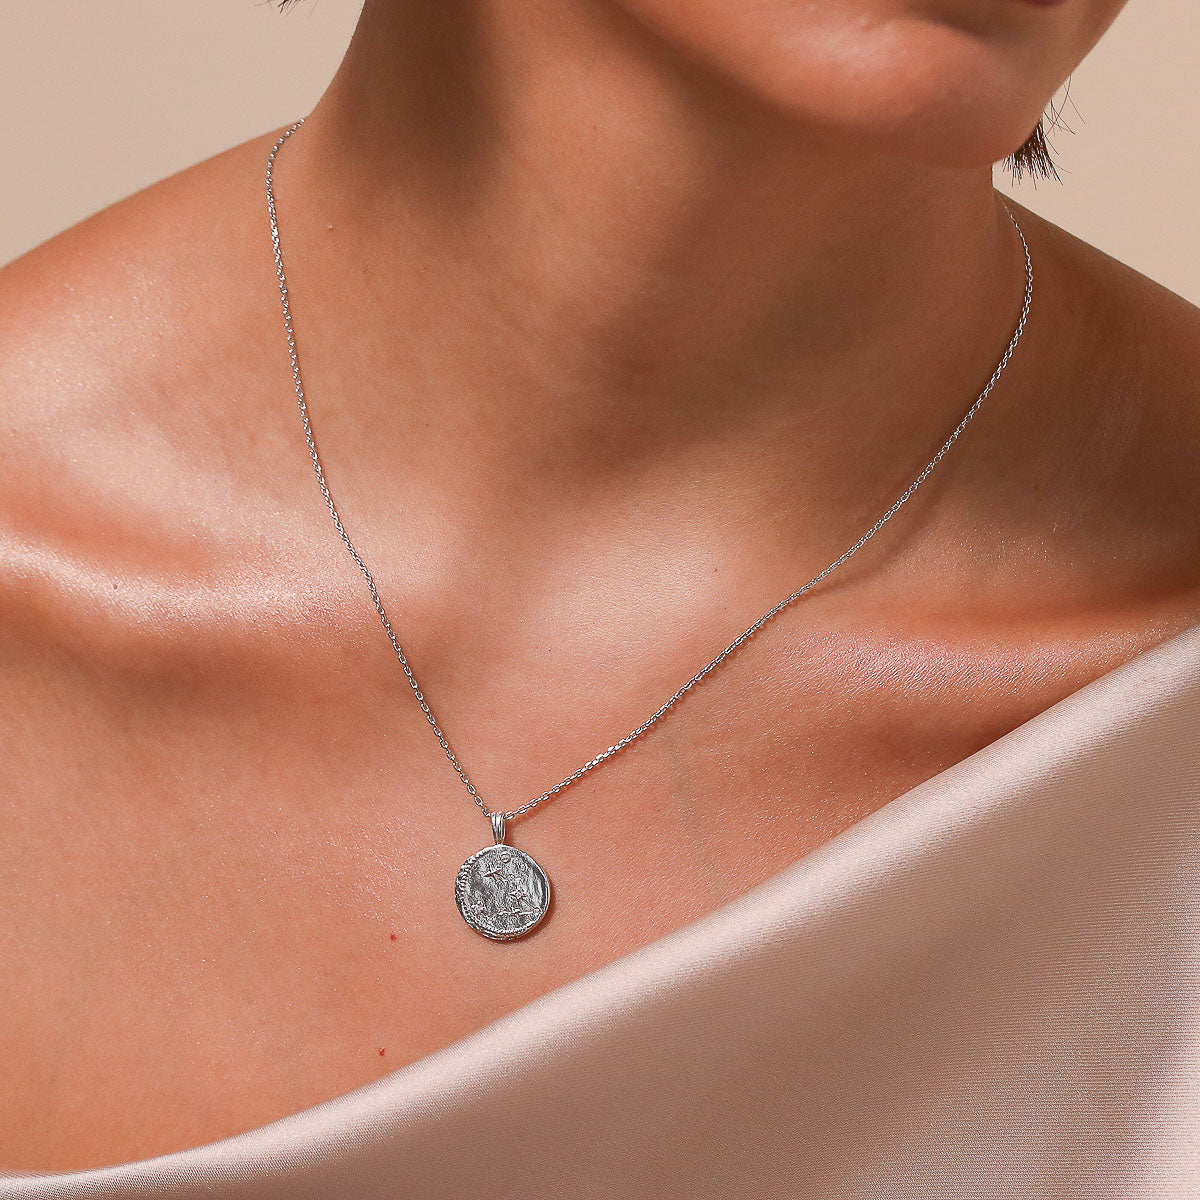 Pisces Zodiac Pendant Necklace in Silver worn